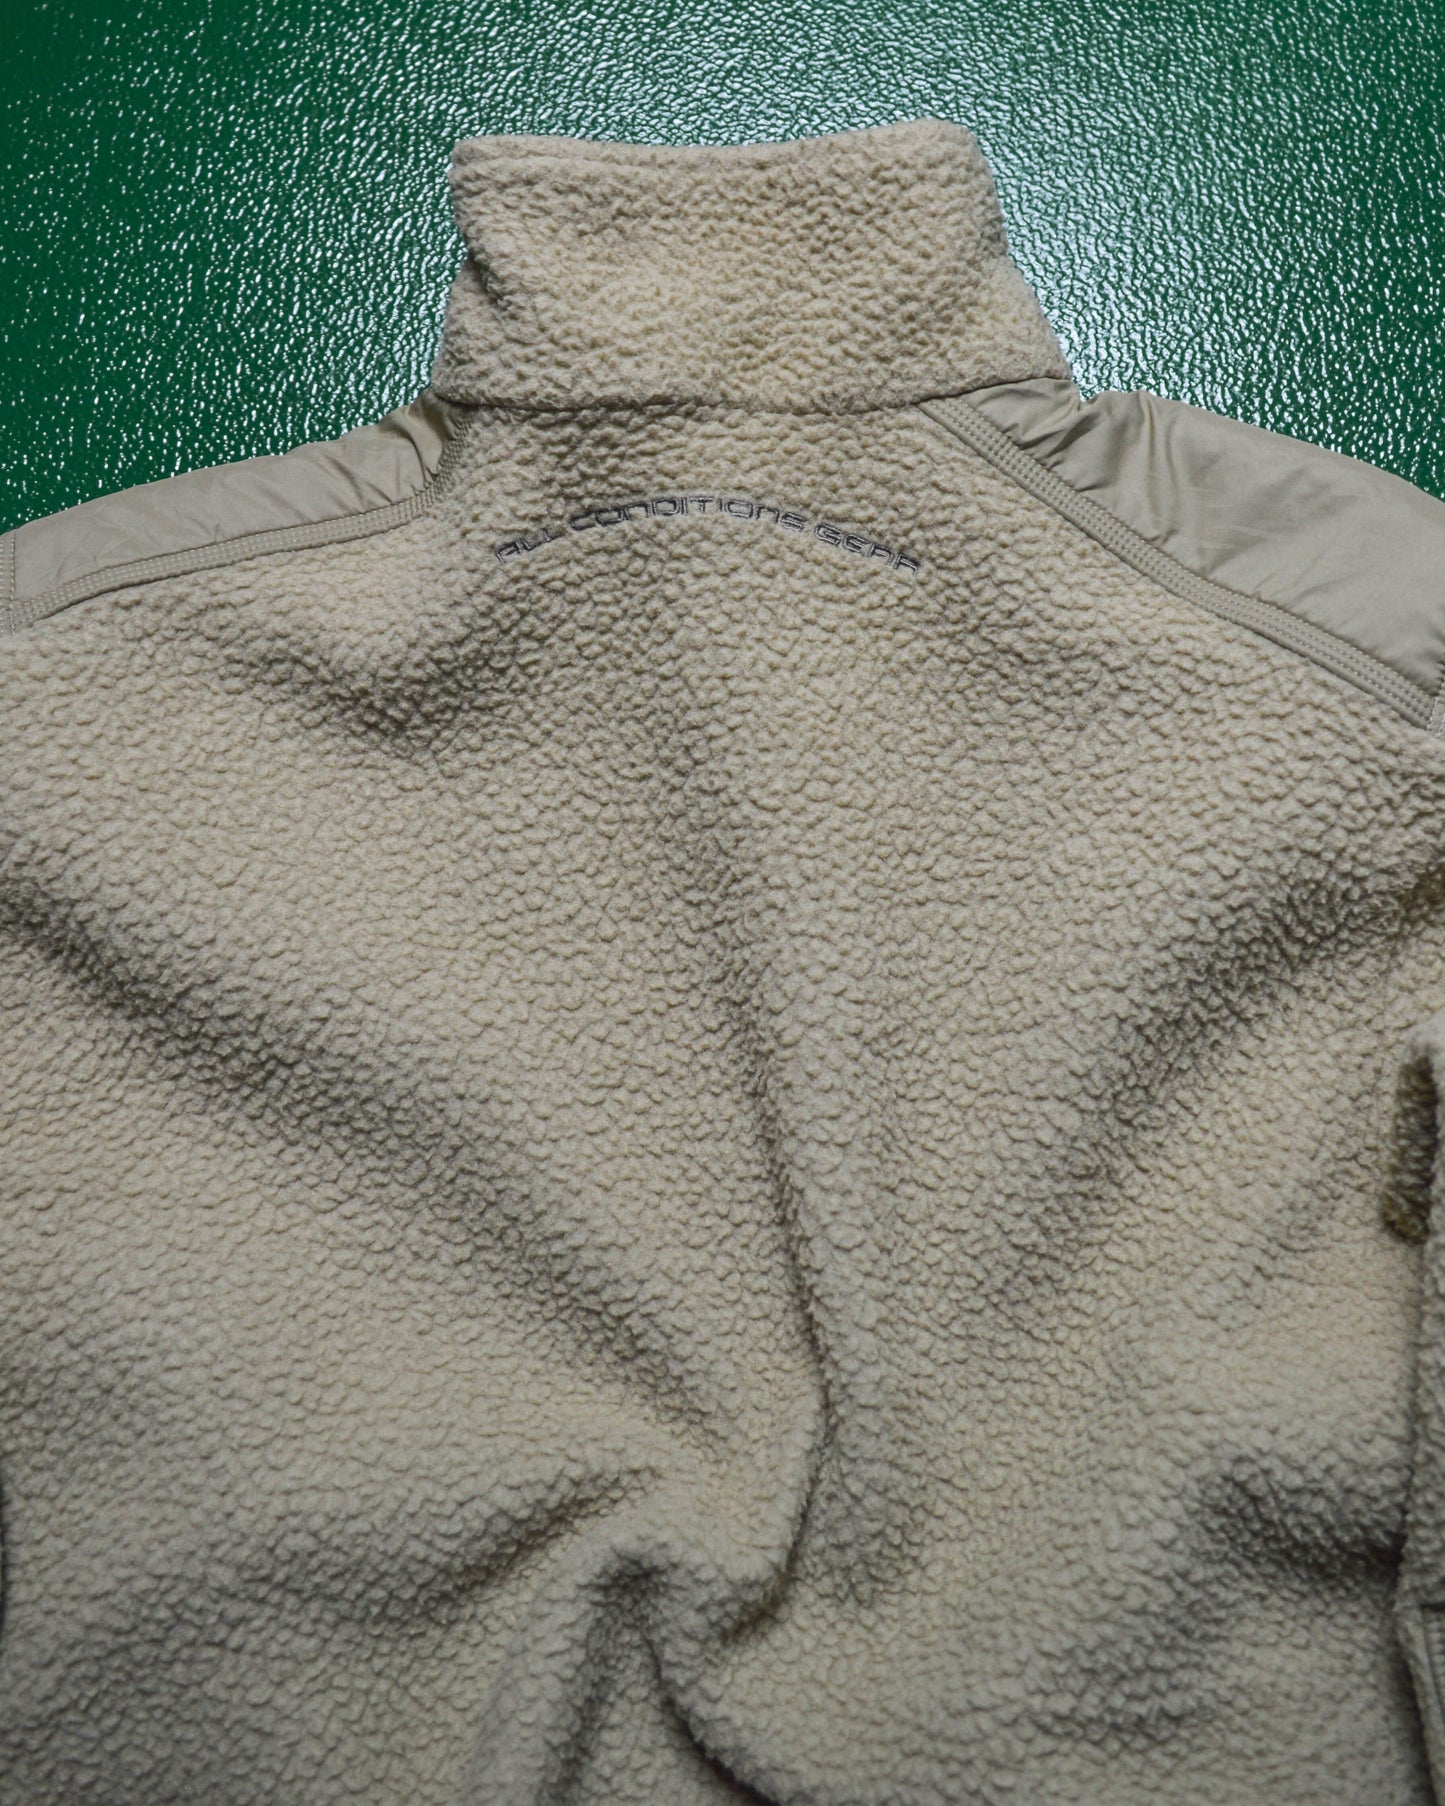 Nike ACG Deep Pile Fleece Reversible Beige / Brown Jacket (M, XL, XXL)